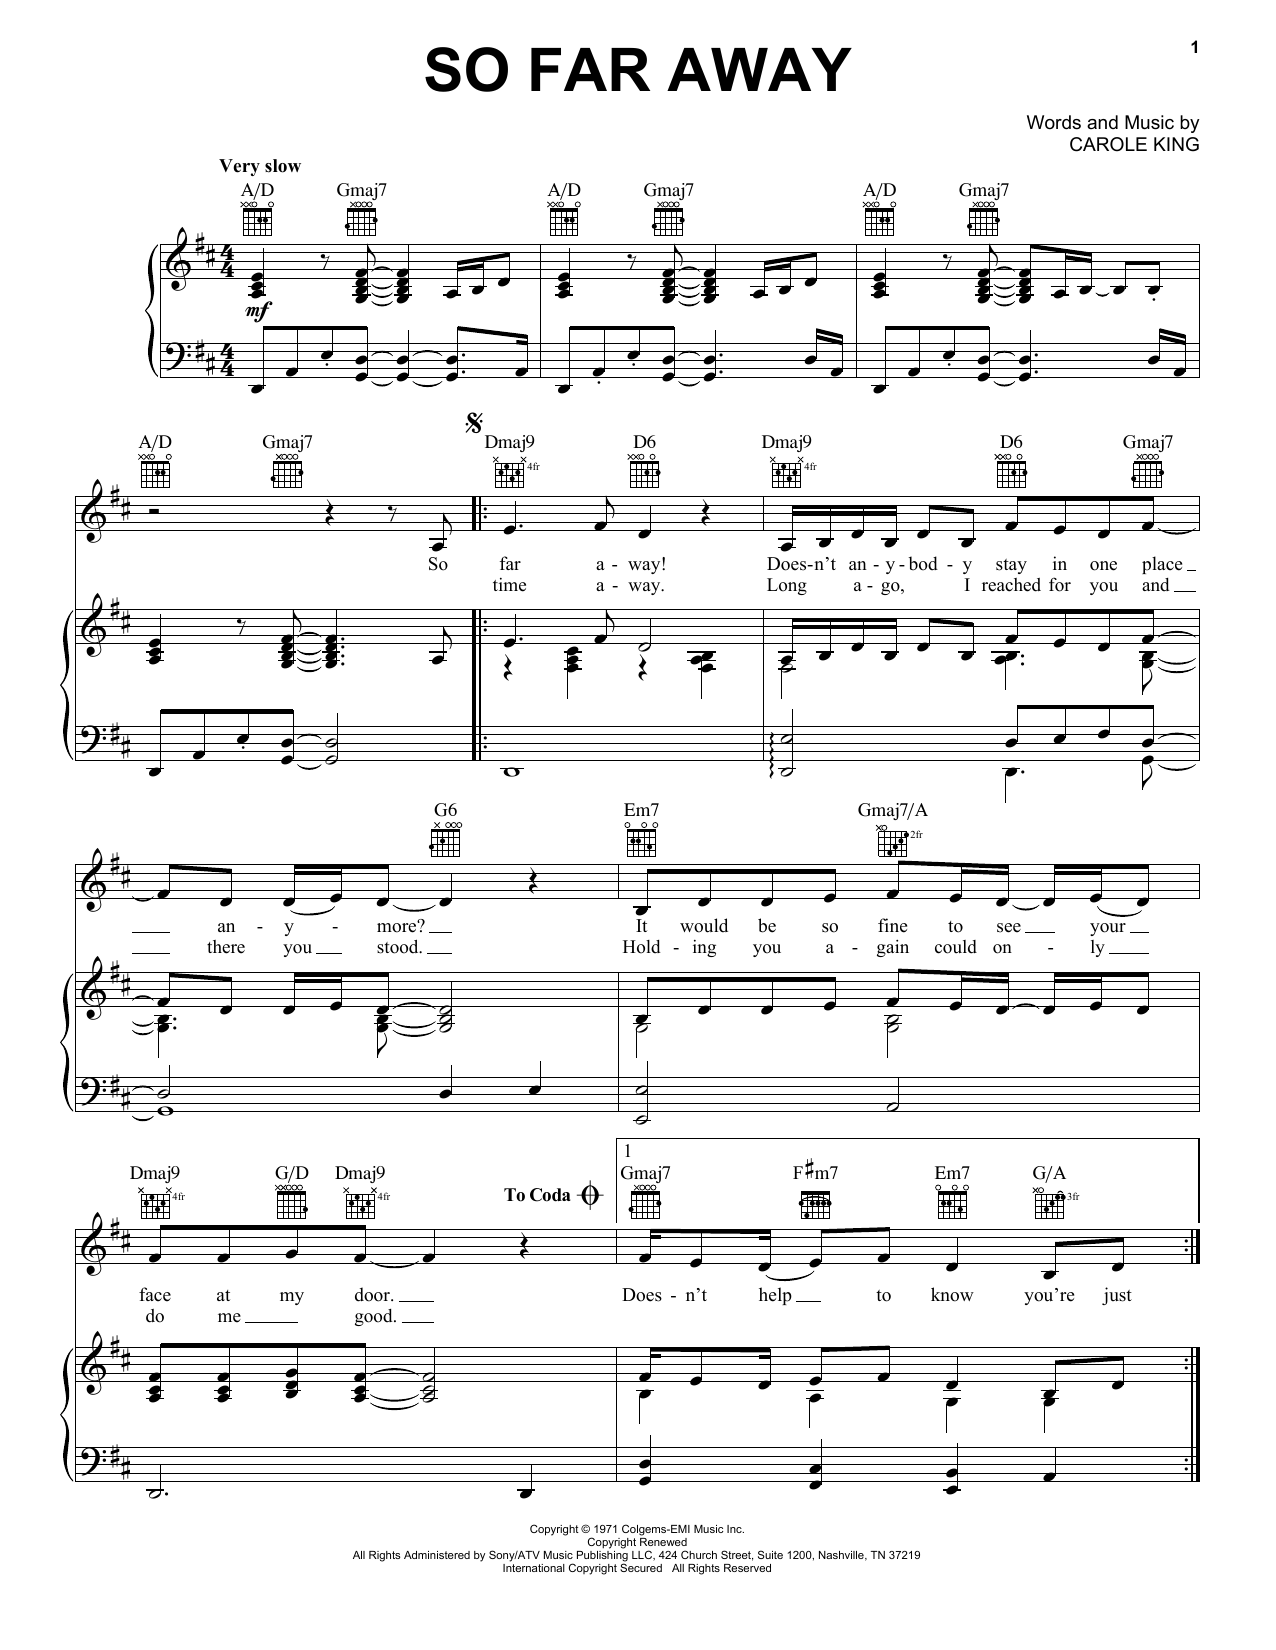 Carole King So Far Away Sheet Music Notes & Chords for Lyrics & Piano Chords - Download or Print PDF